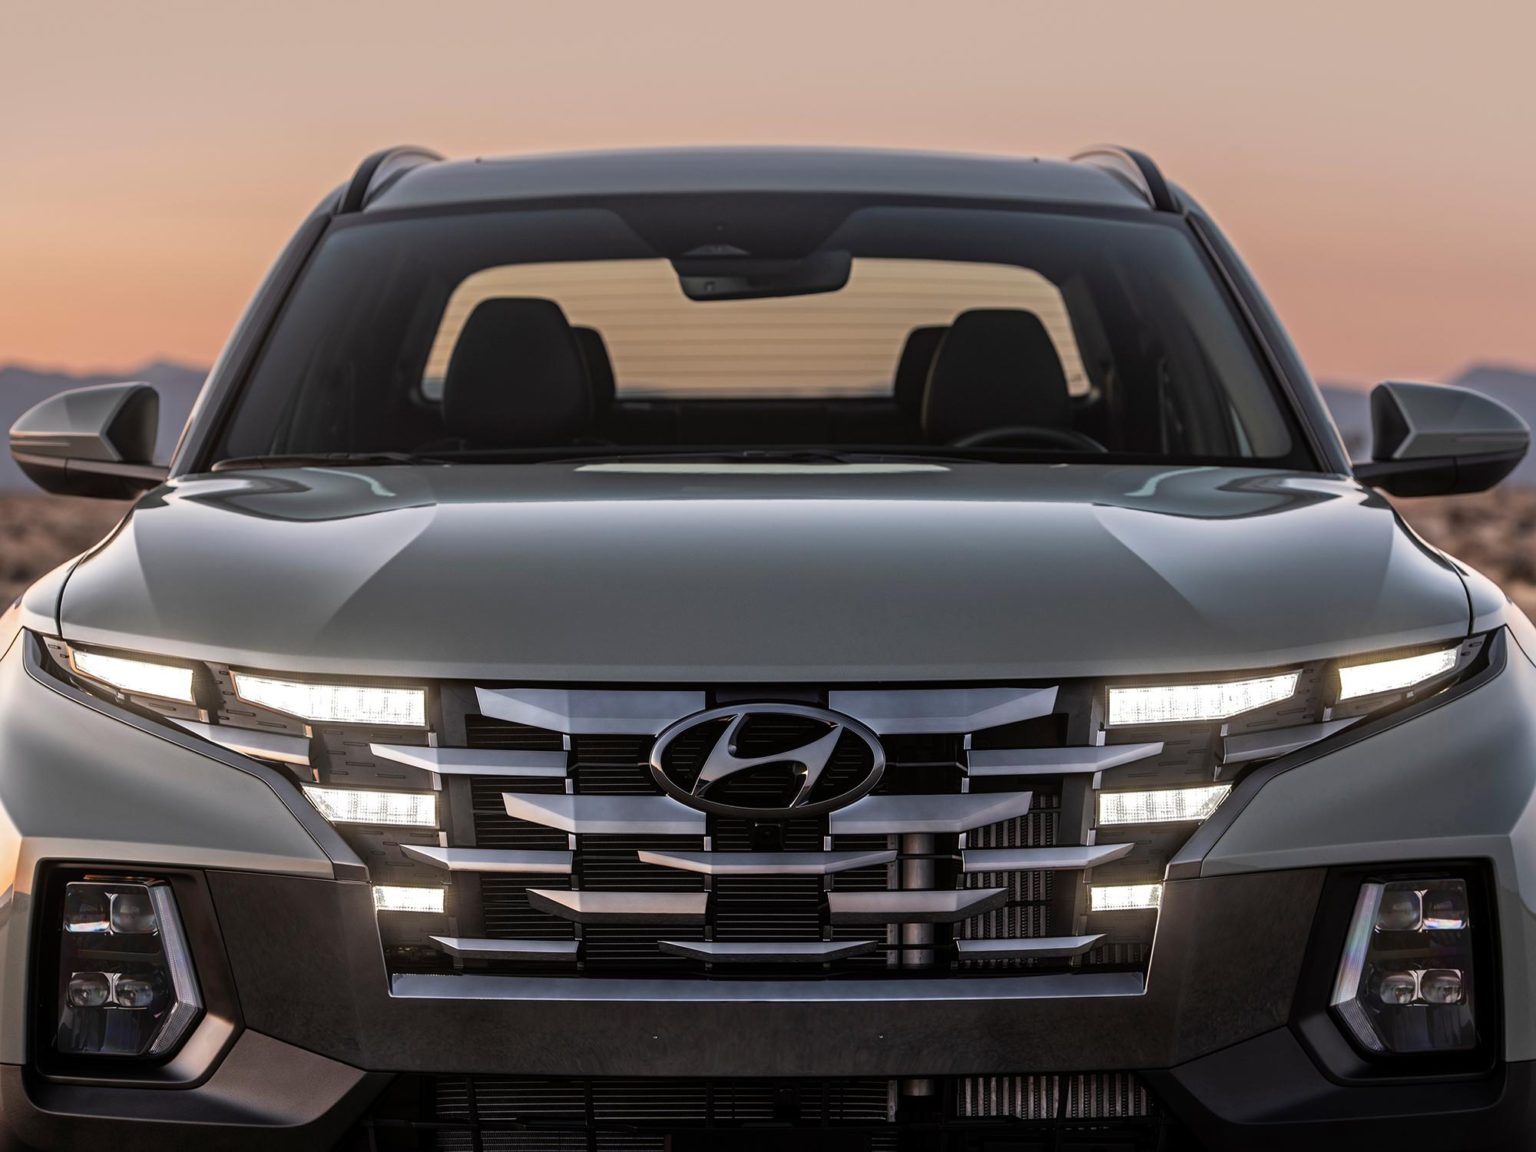 The 2022 Hyundai Santa Cruz is new to the company's lineup.